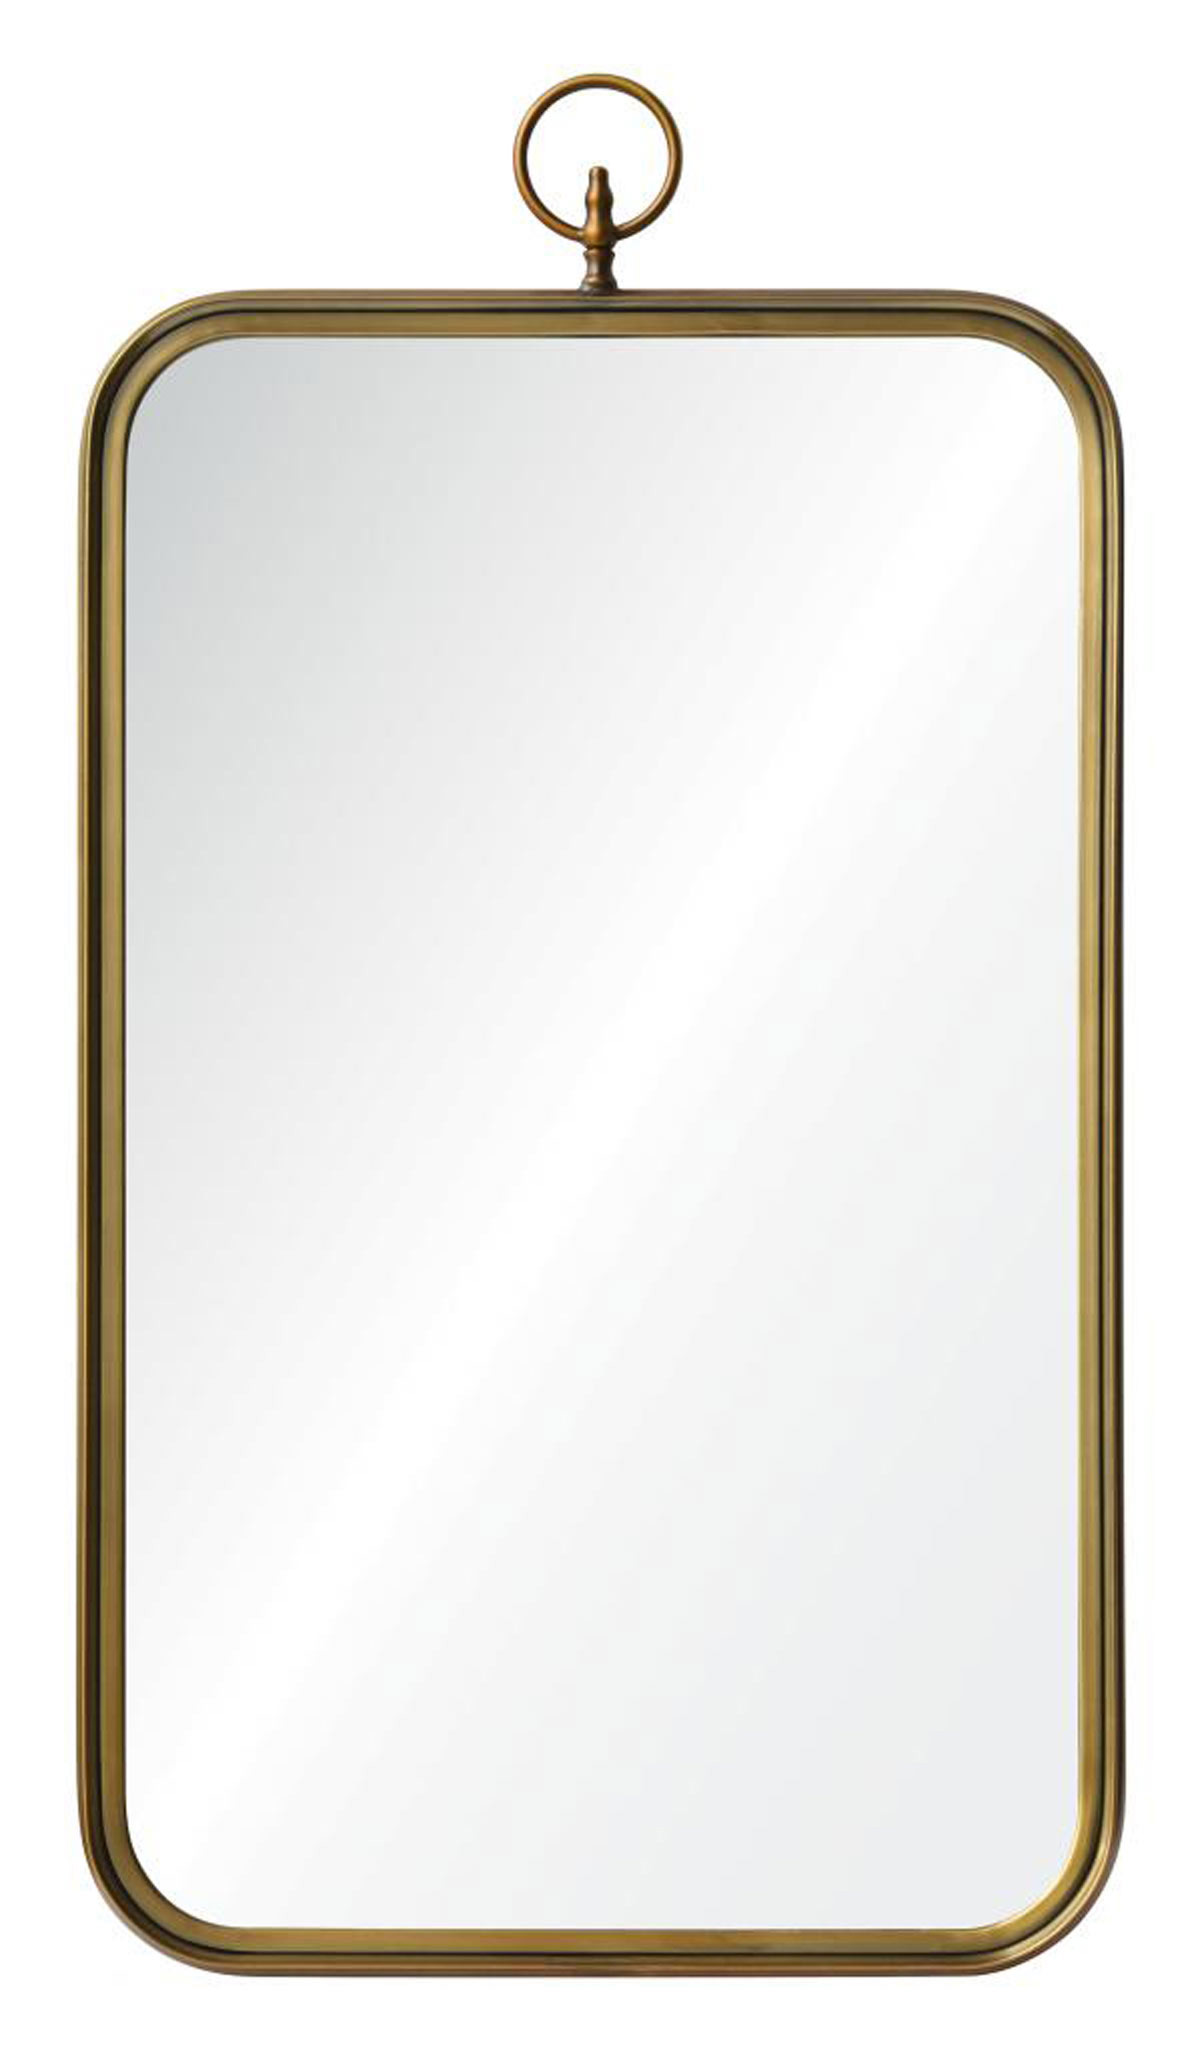 Ren-Wil Coburg Mirror - Gold